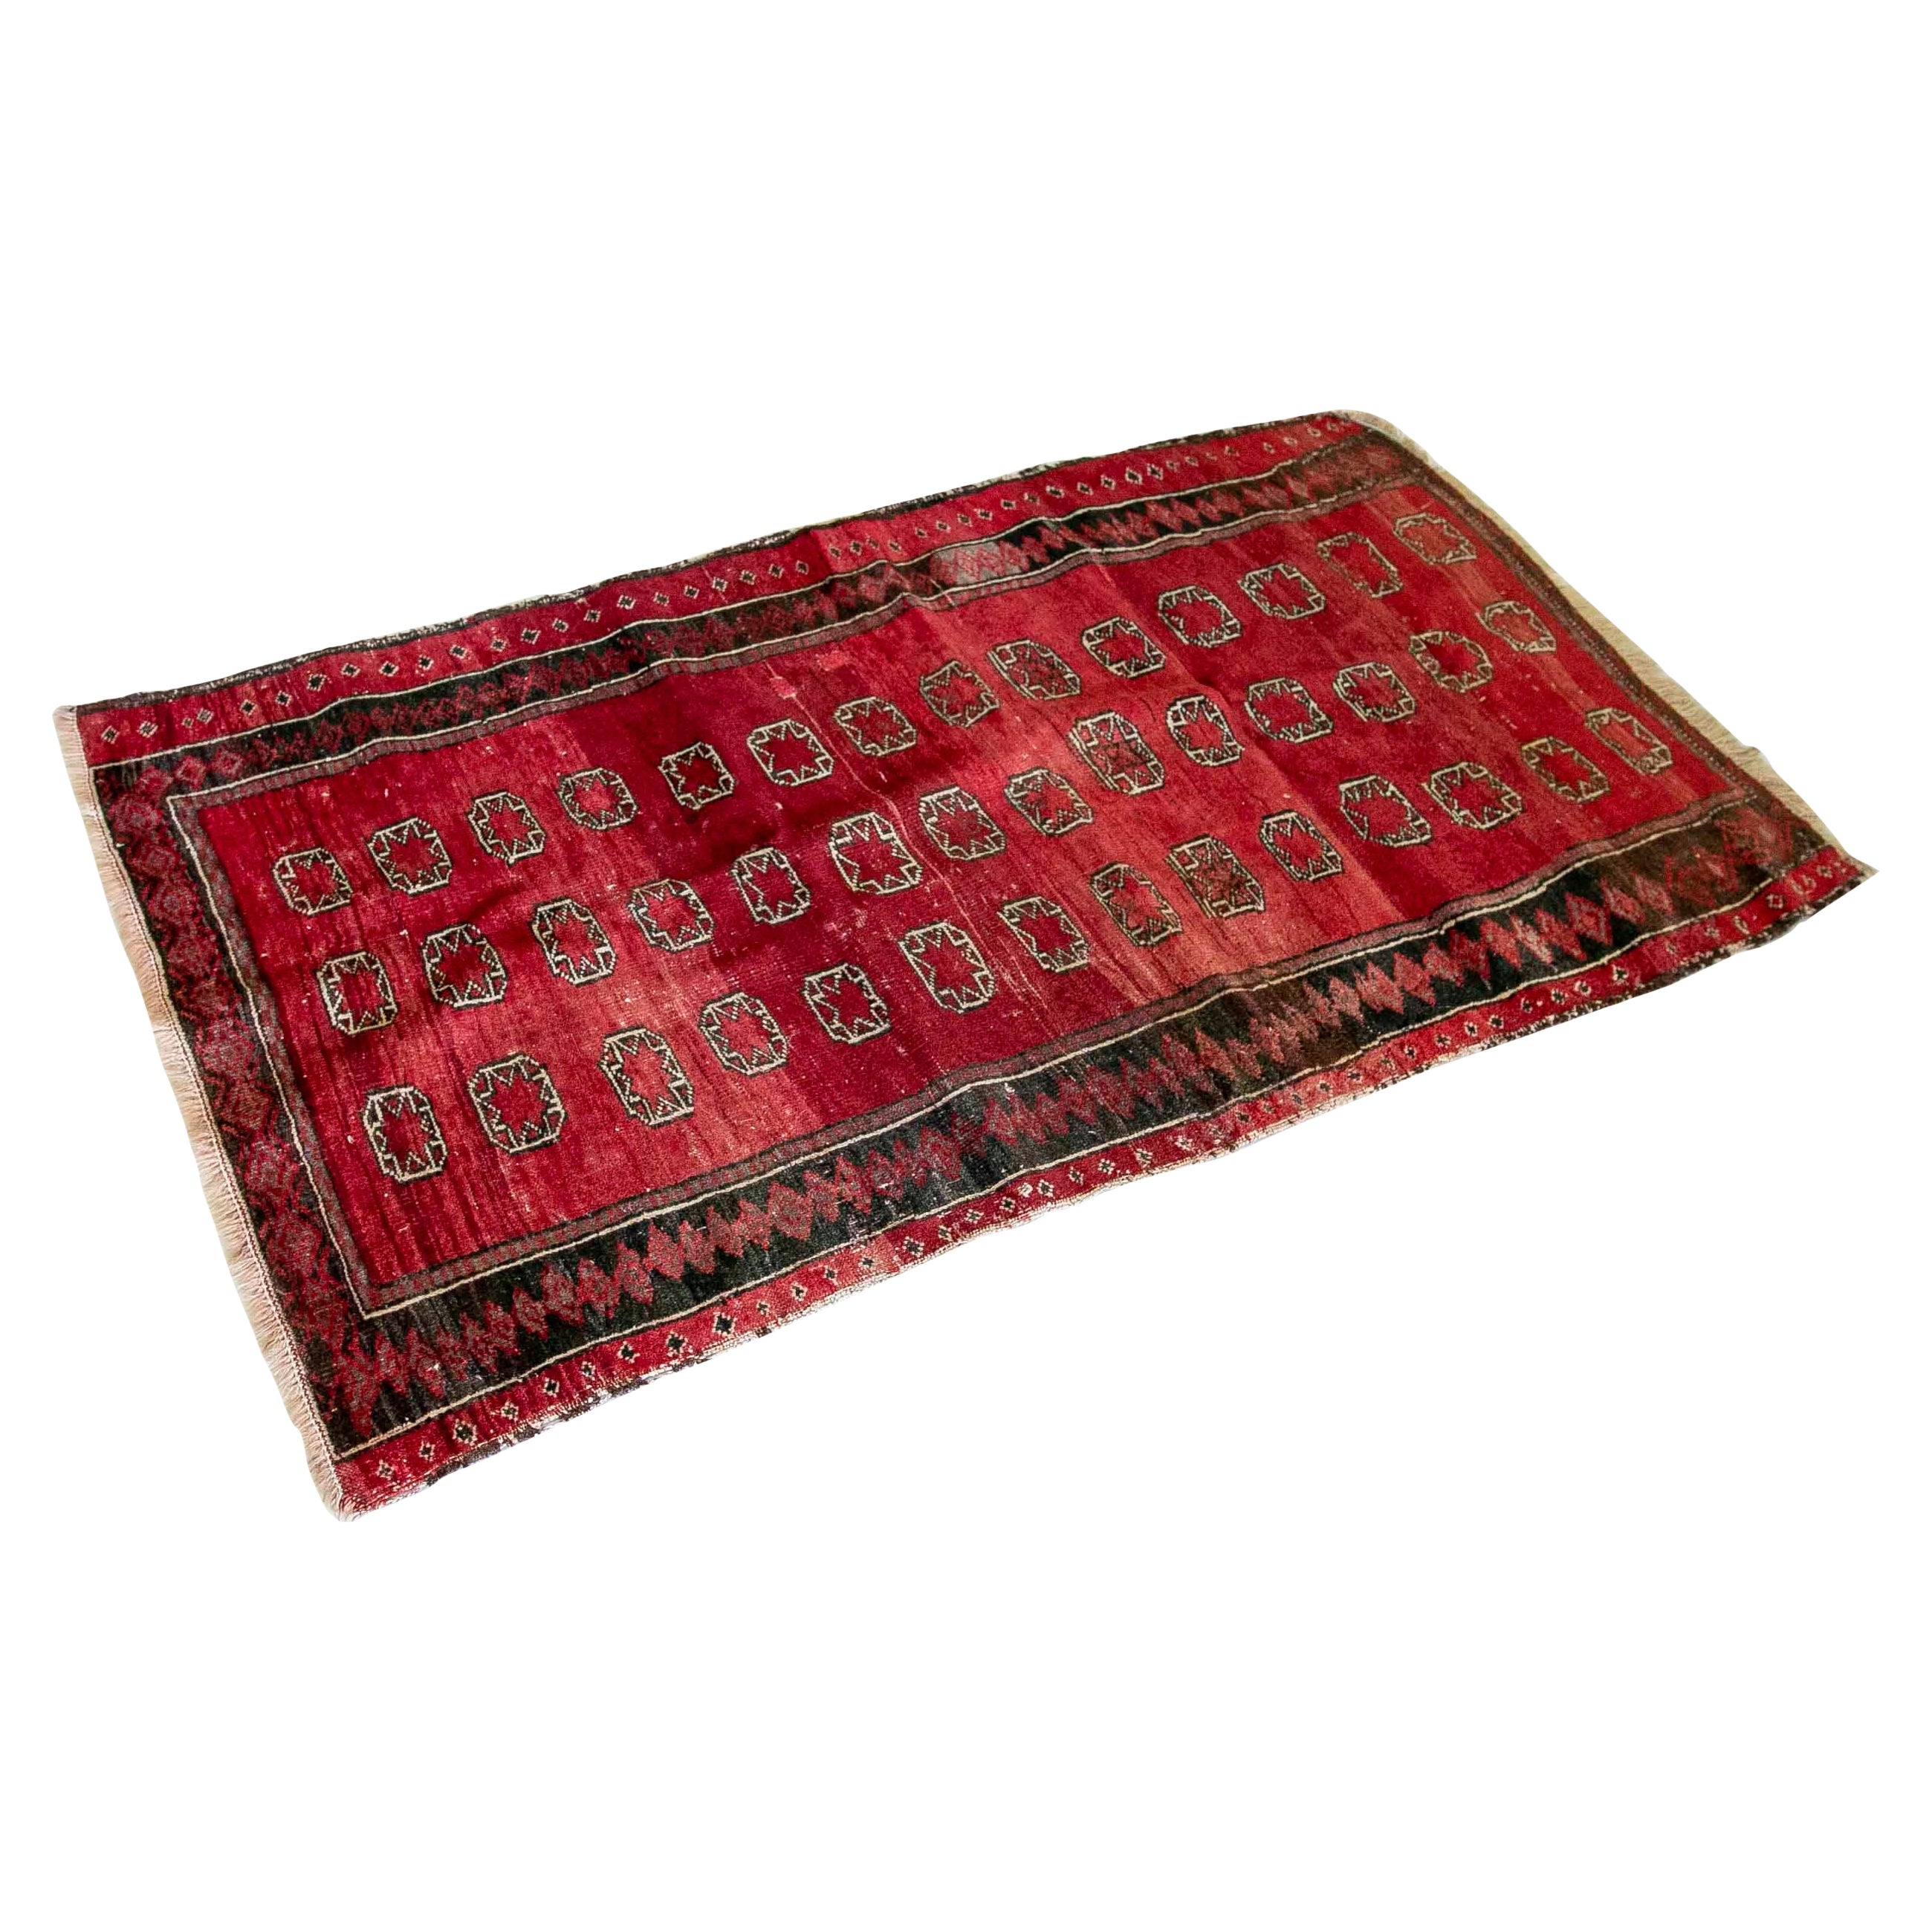 19th Century Turkish Woollen Carpet in Red Tones  For Sale